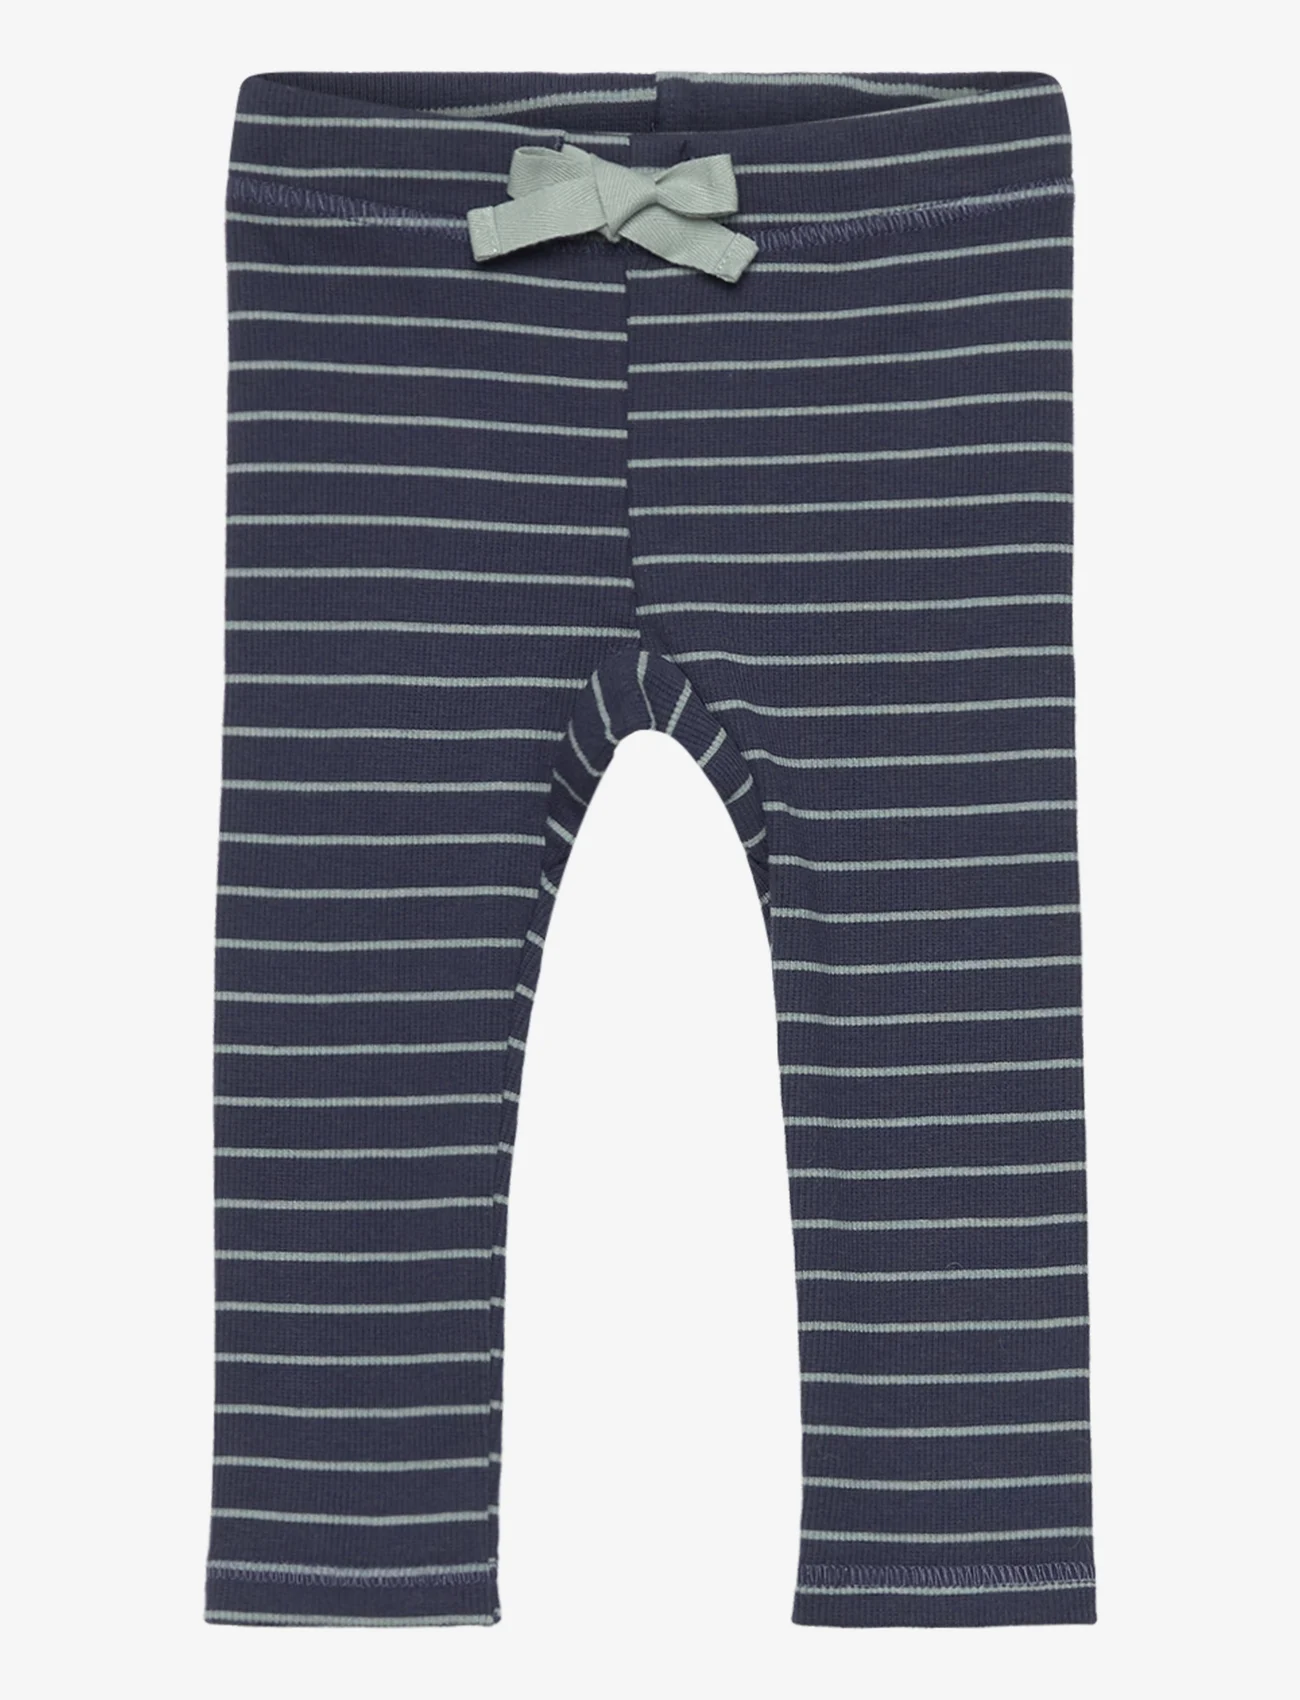 Müsli by Green Cotton - Stripe rib pants baby - madalaimad hinnad - night blue/ spa green - 0